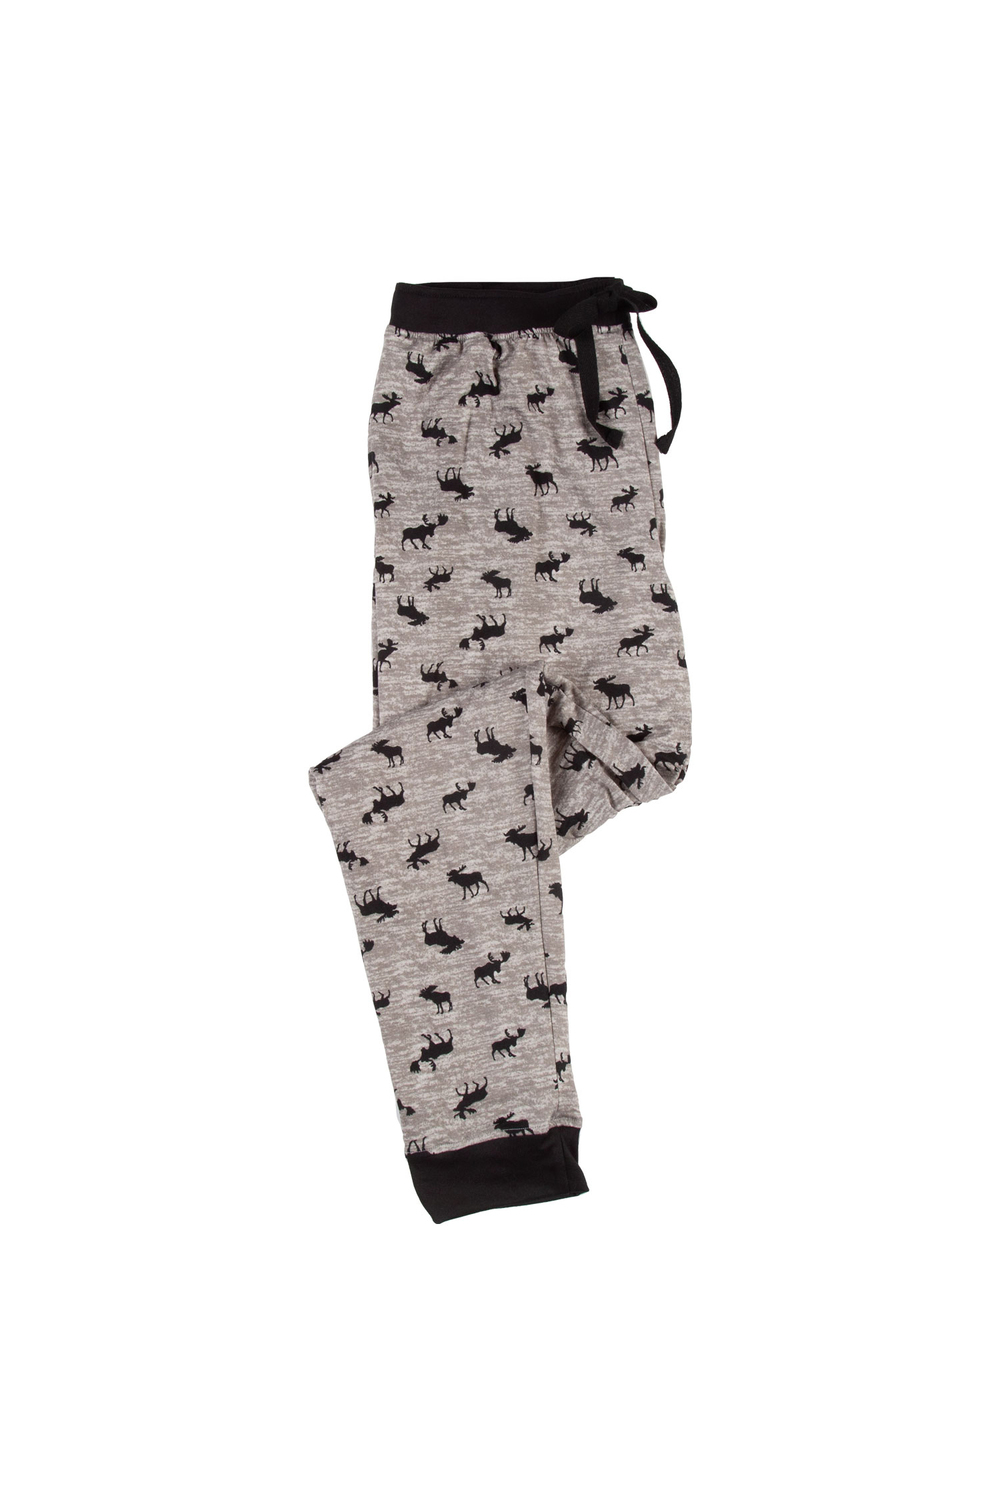 Stretch knit jogger style pajama pants - Moose